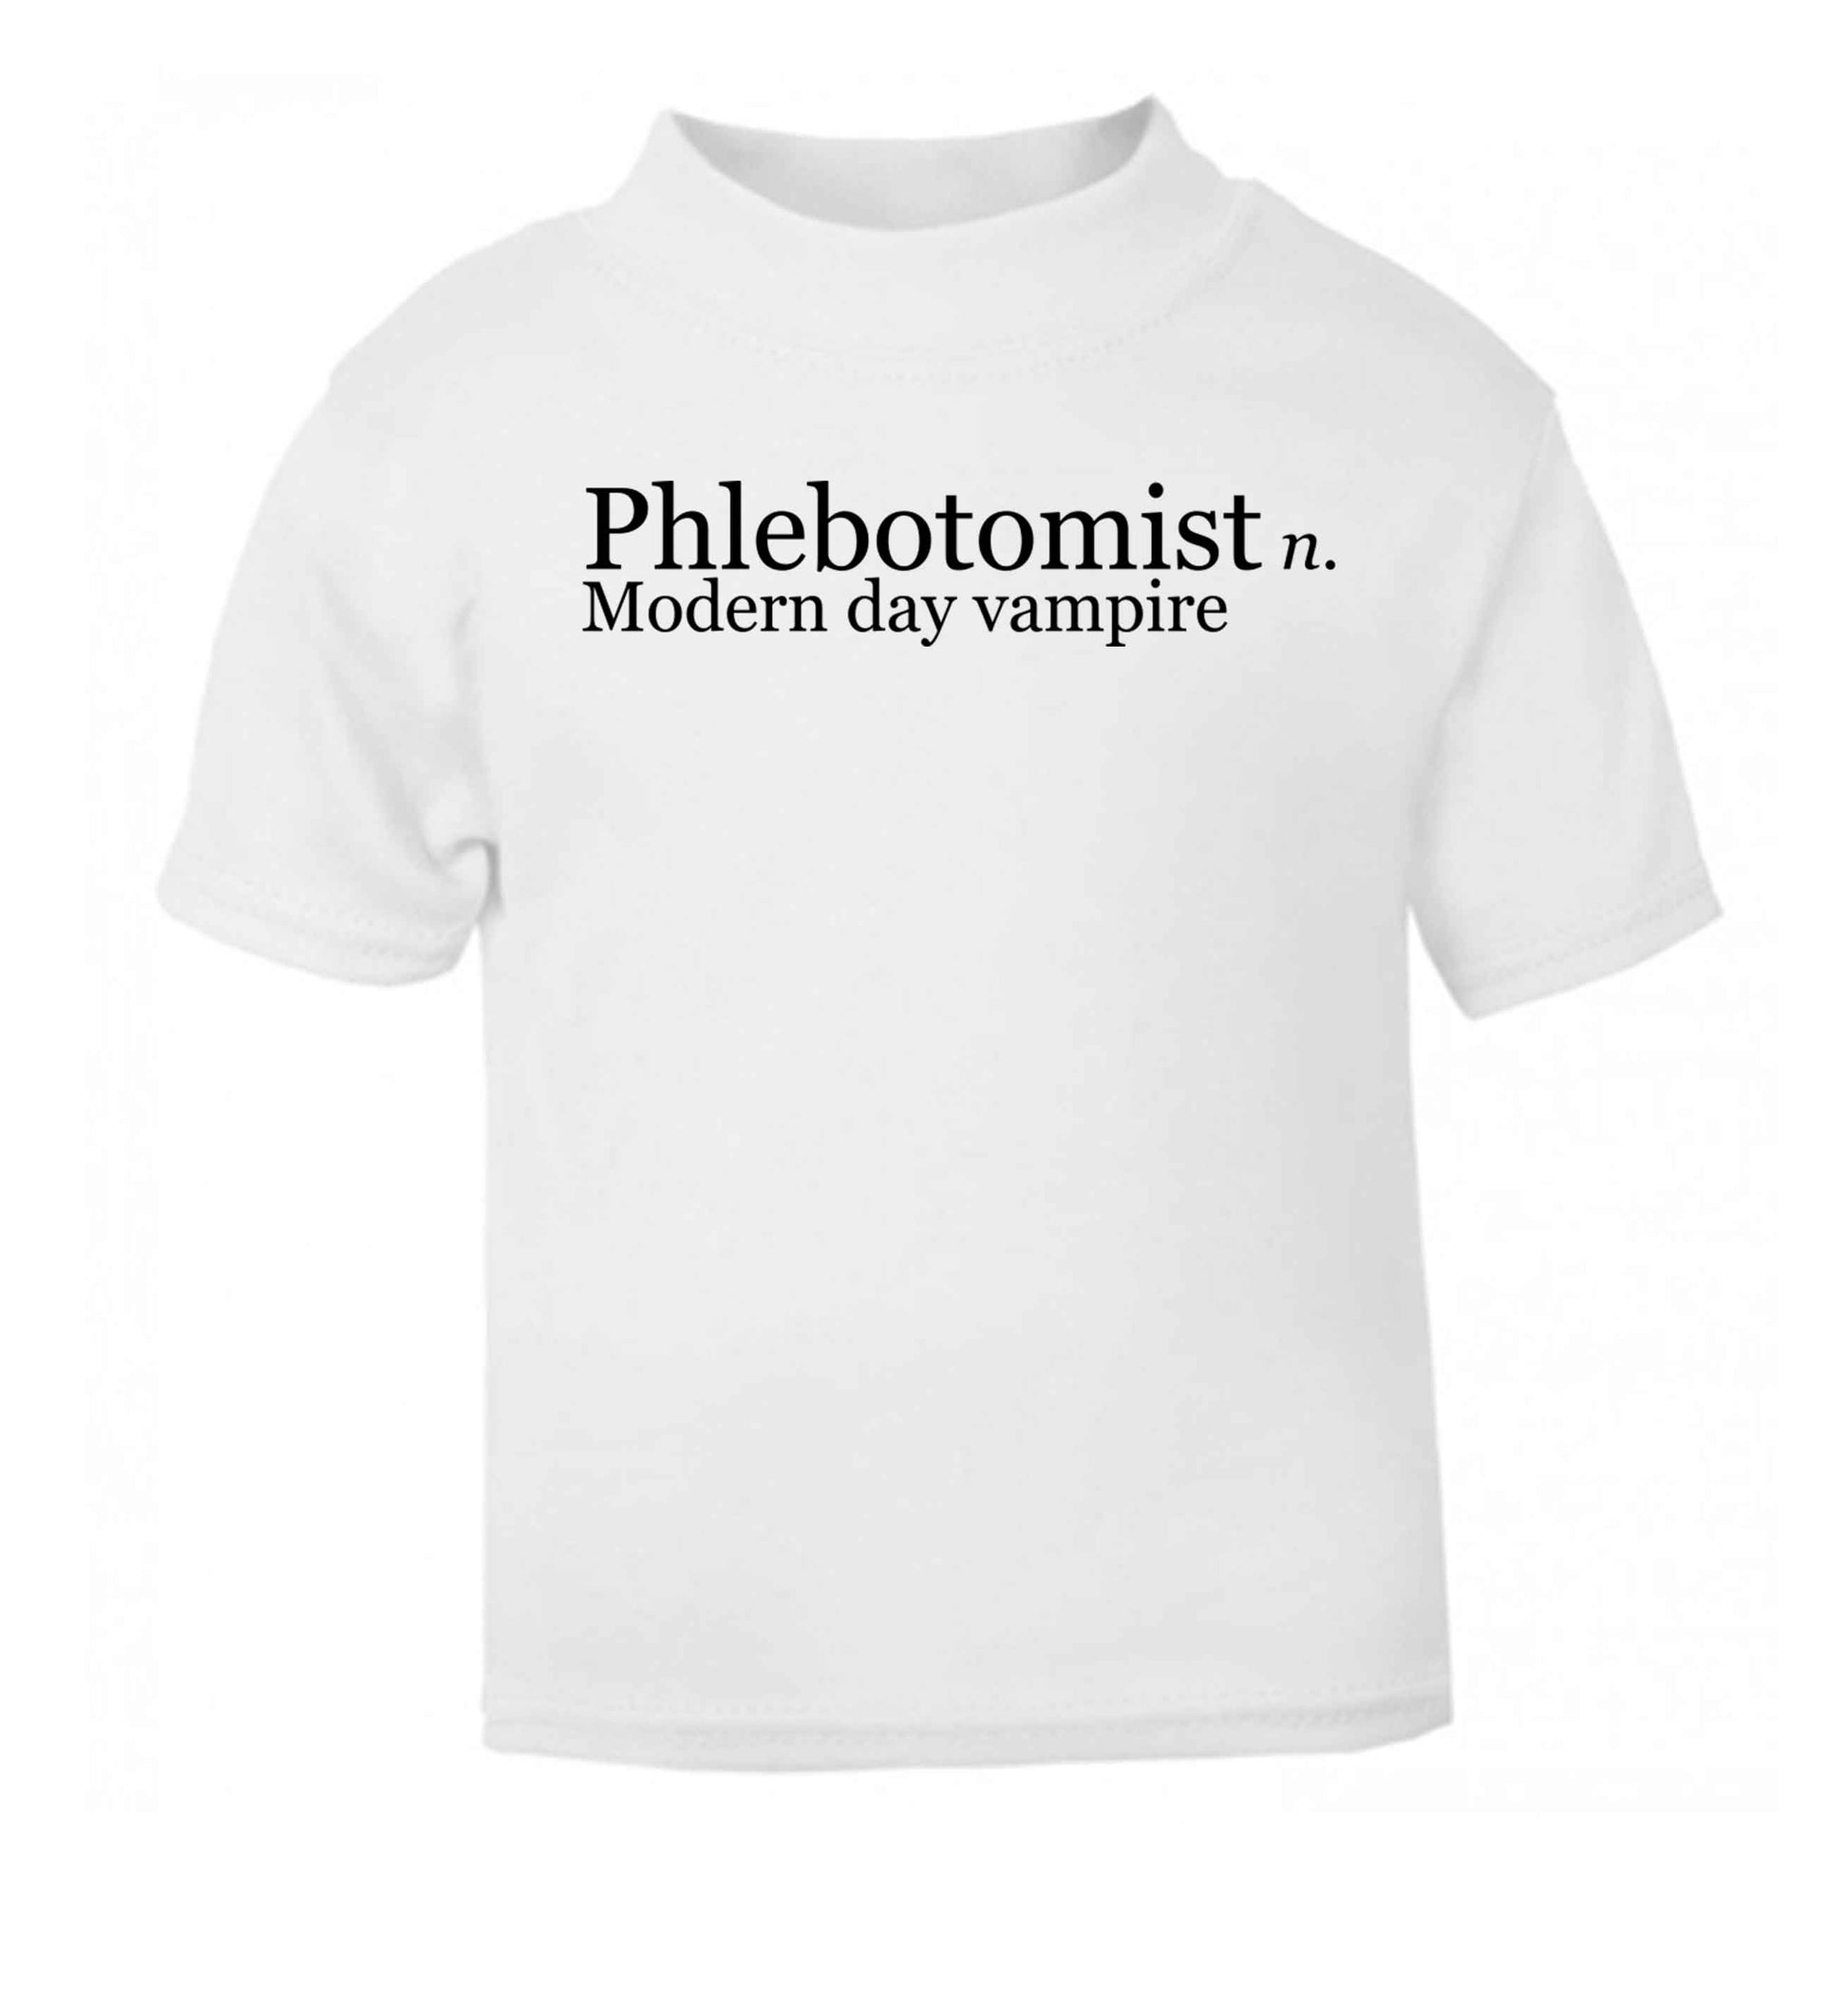 Phlebotomist - Modern day vampire white baby toddler Tshirt 2 Years